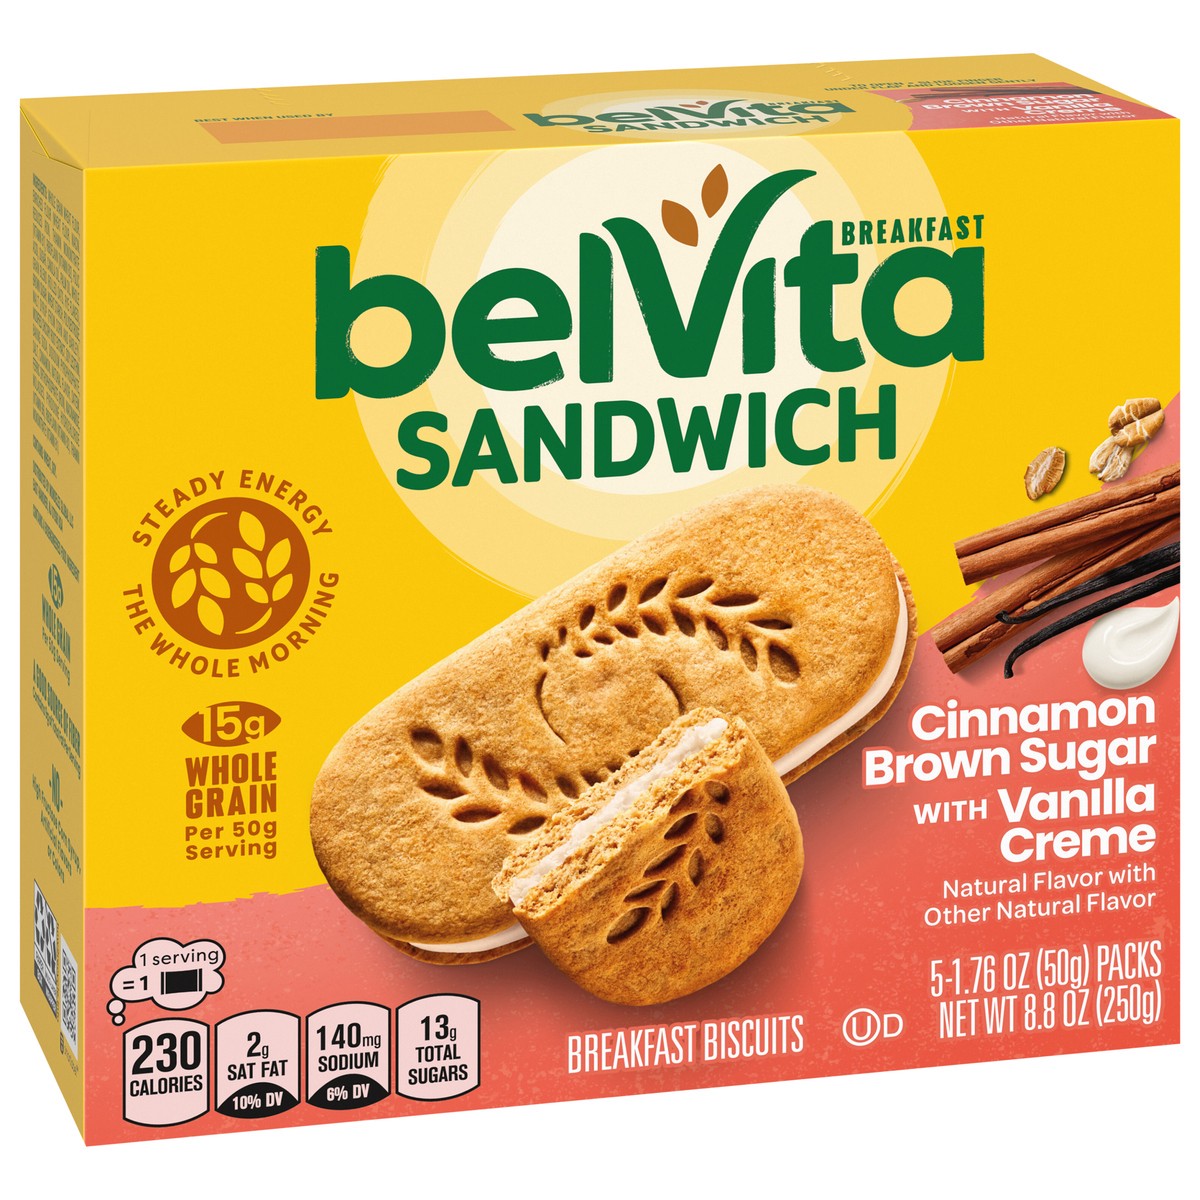 slide 7 of 9, belVita Breakfast Sandwich Cinnamon Brown Sugar with Vanilla Creme Breakfast Biscuits, 5 Packs (2 Sandwiches Per Pack) RECALLED PRODUCT, 5 ct; 1.76 oz